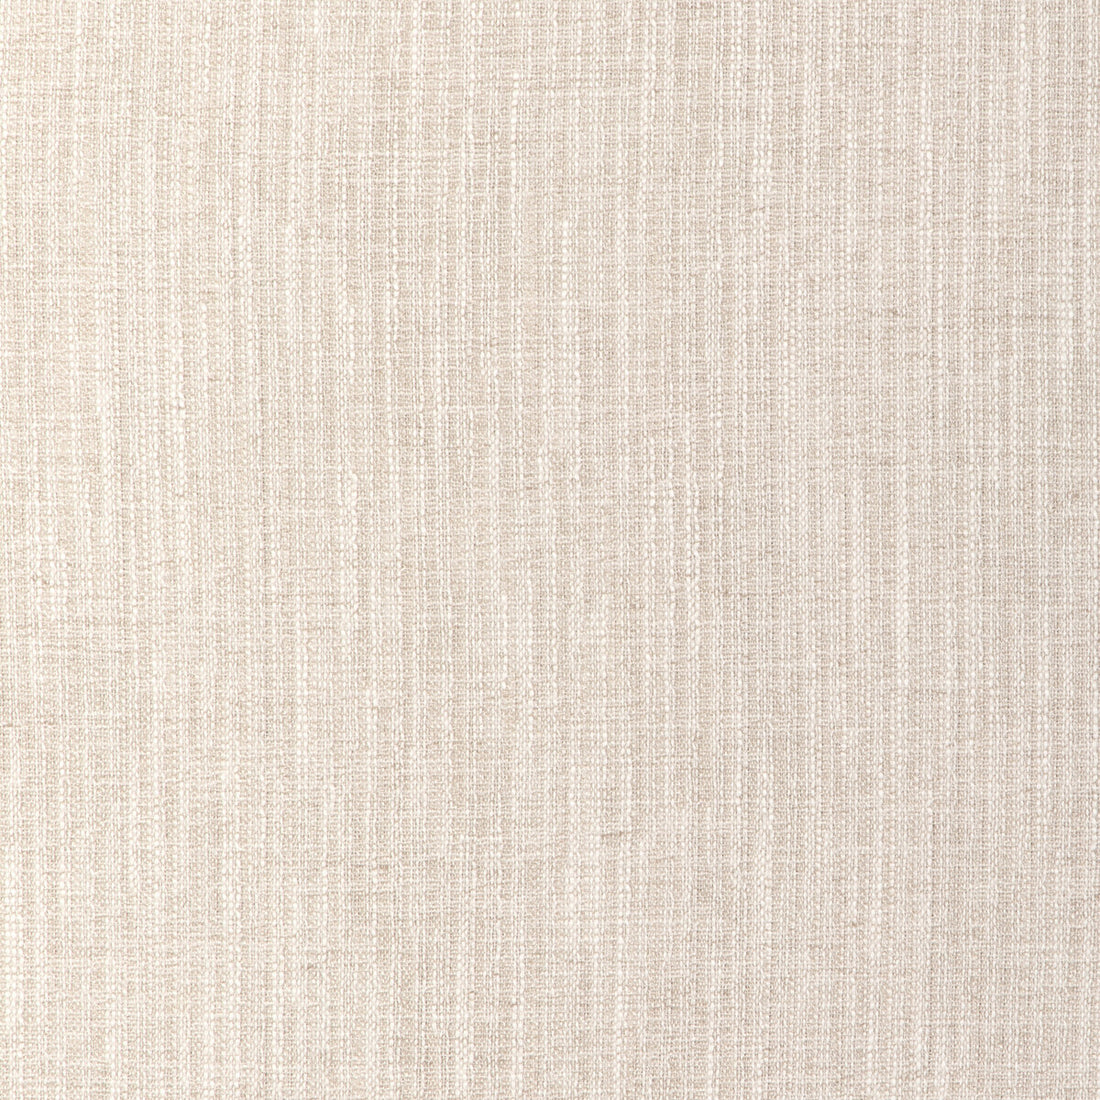 Kravet Smart fabric in 36658-16 color - pattern 36658.16.0 - by Kravet Smart in the Performance Kravetarmor collection